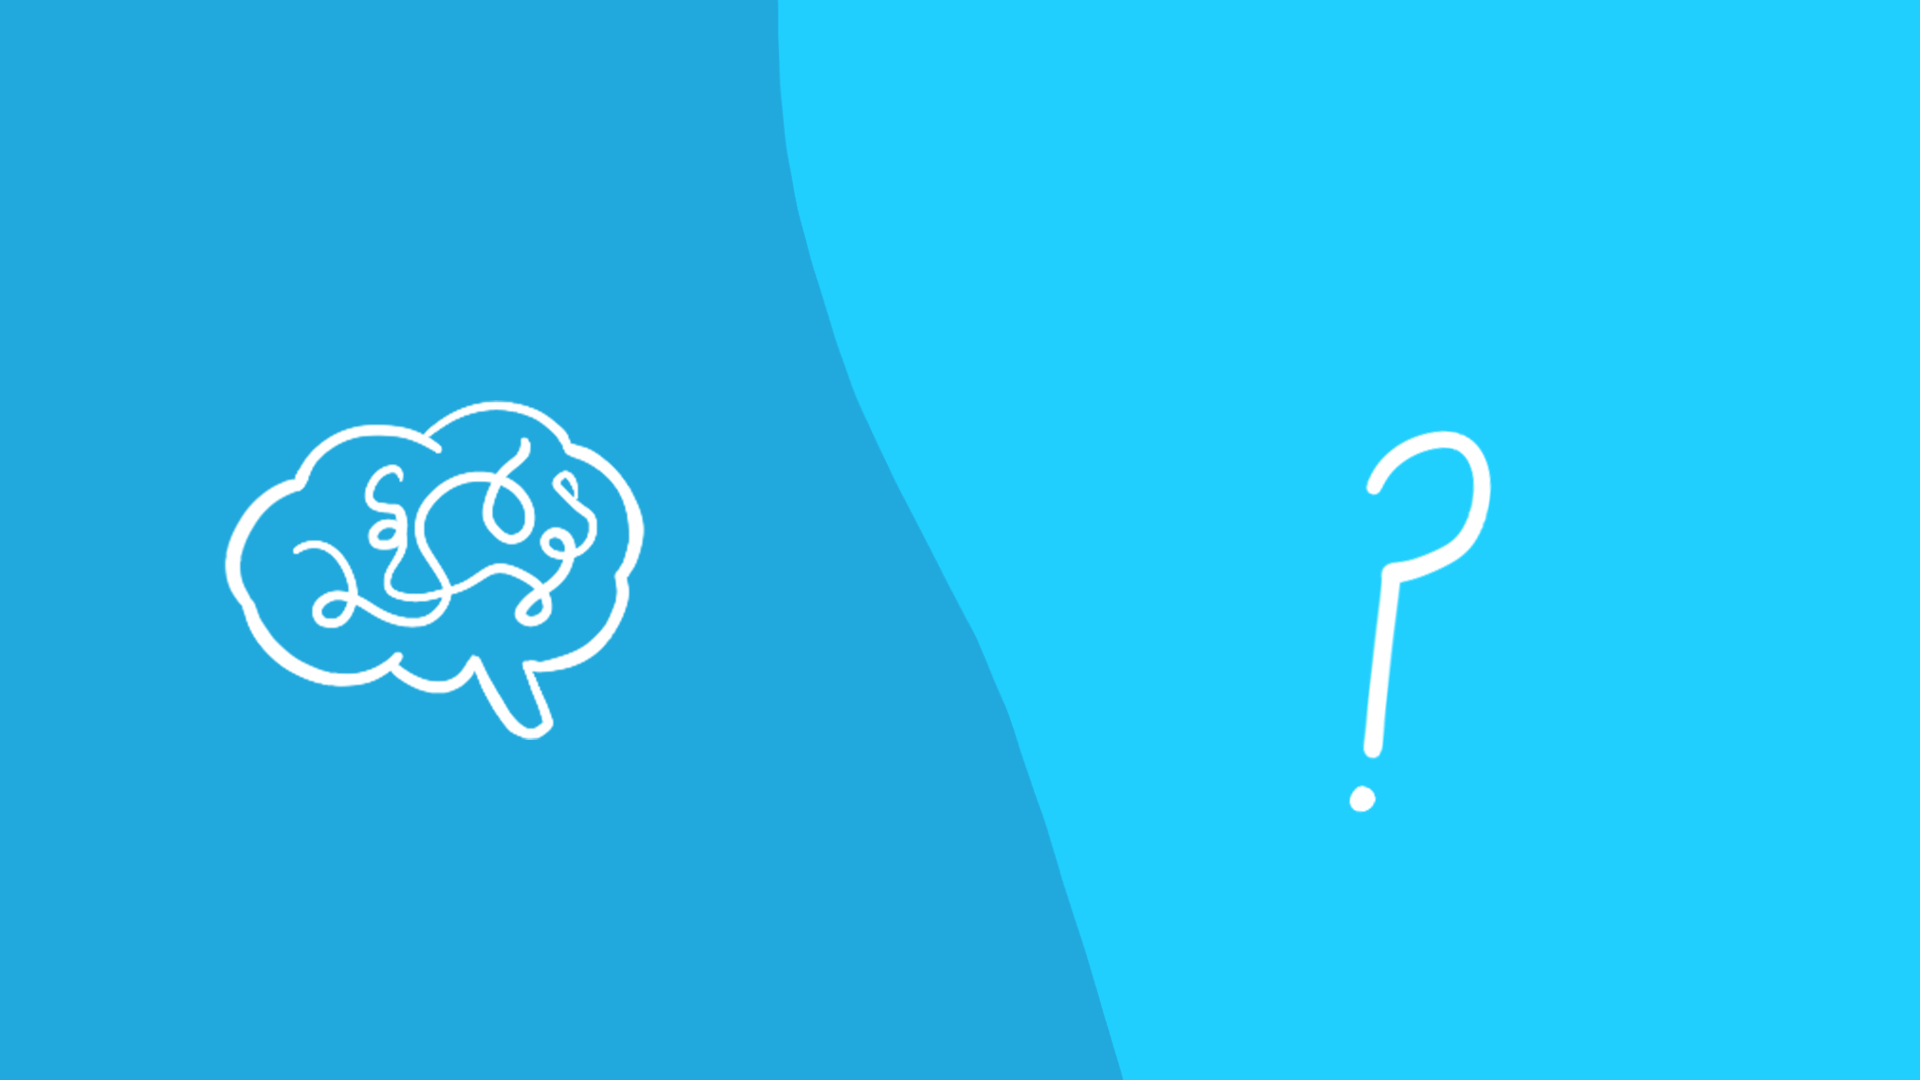 Brain vs a question mark representing anxiety vs stress